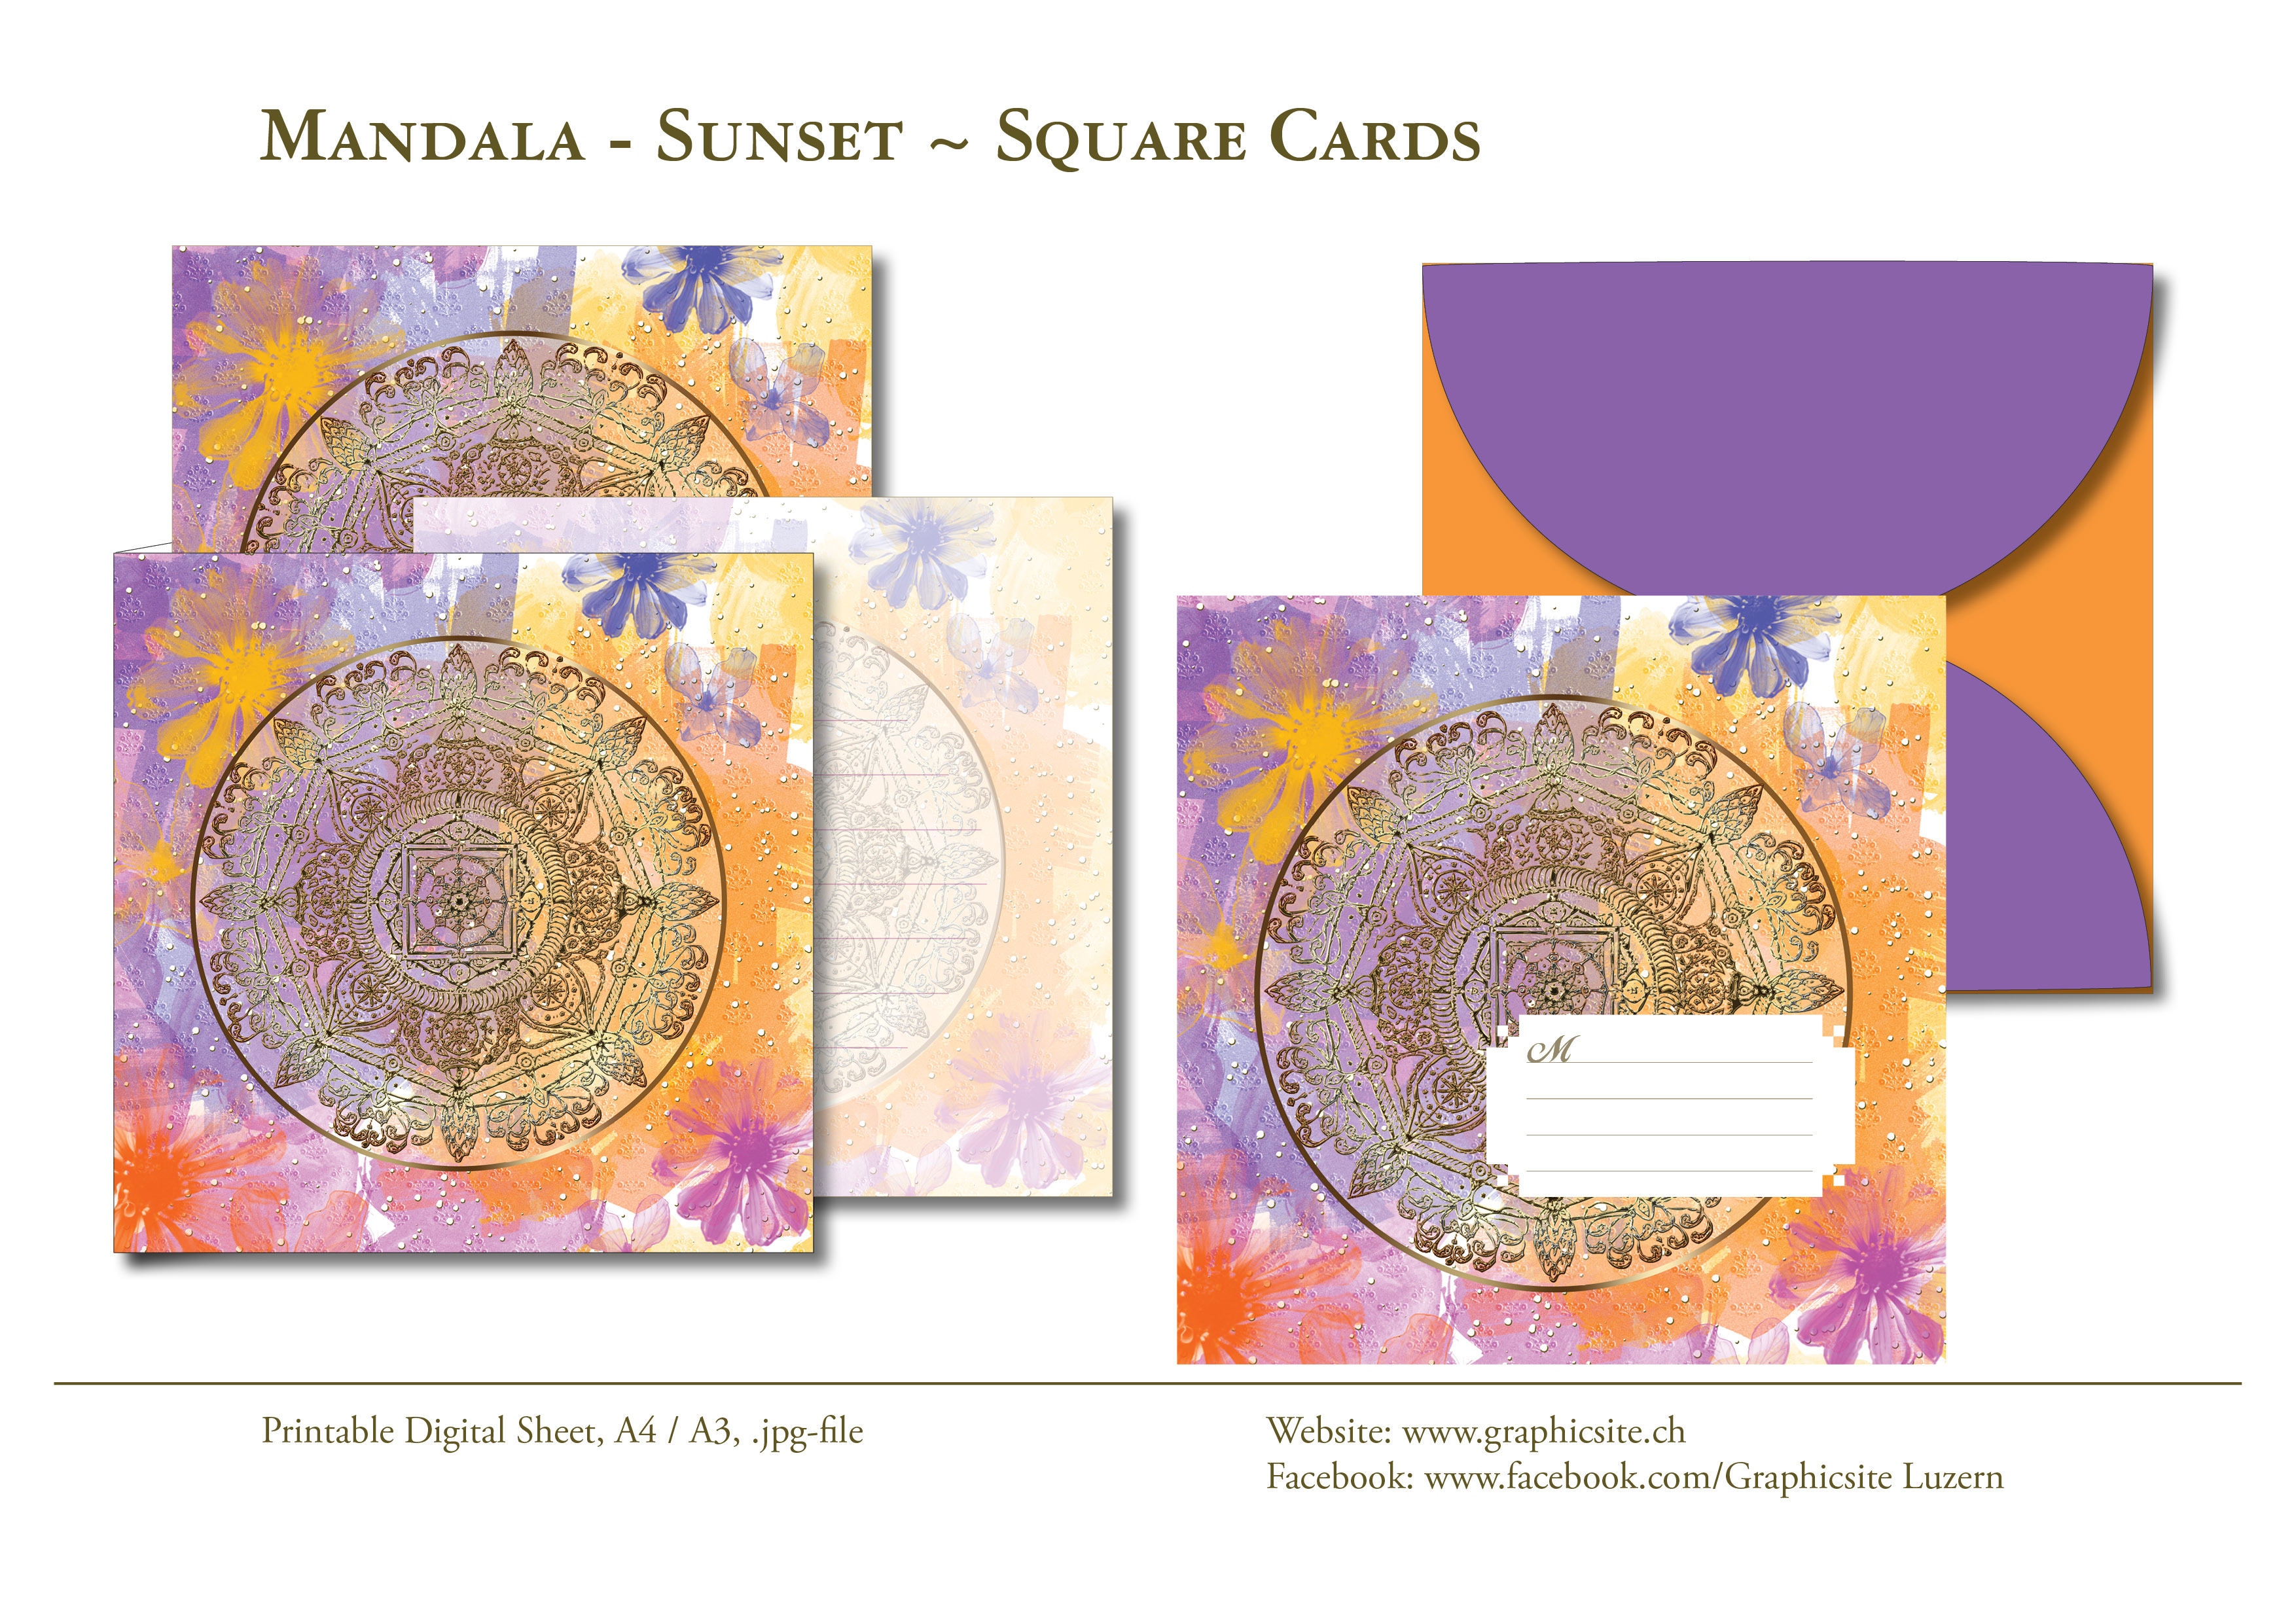 Printable Digital Sheets - Square Cards, MANDALA Sunset, Greeting Cards, Yoga, Meditation, Cards, purple, orange, envelop, Graphic Design, Luzern